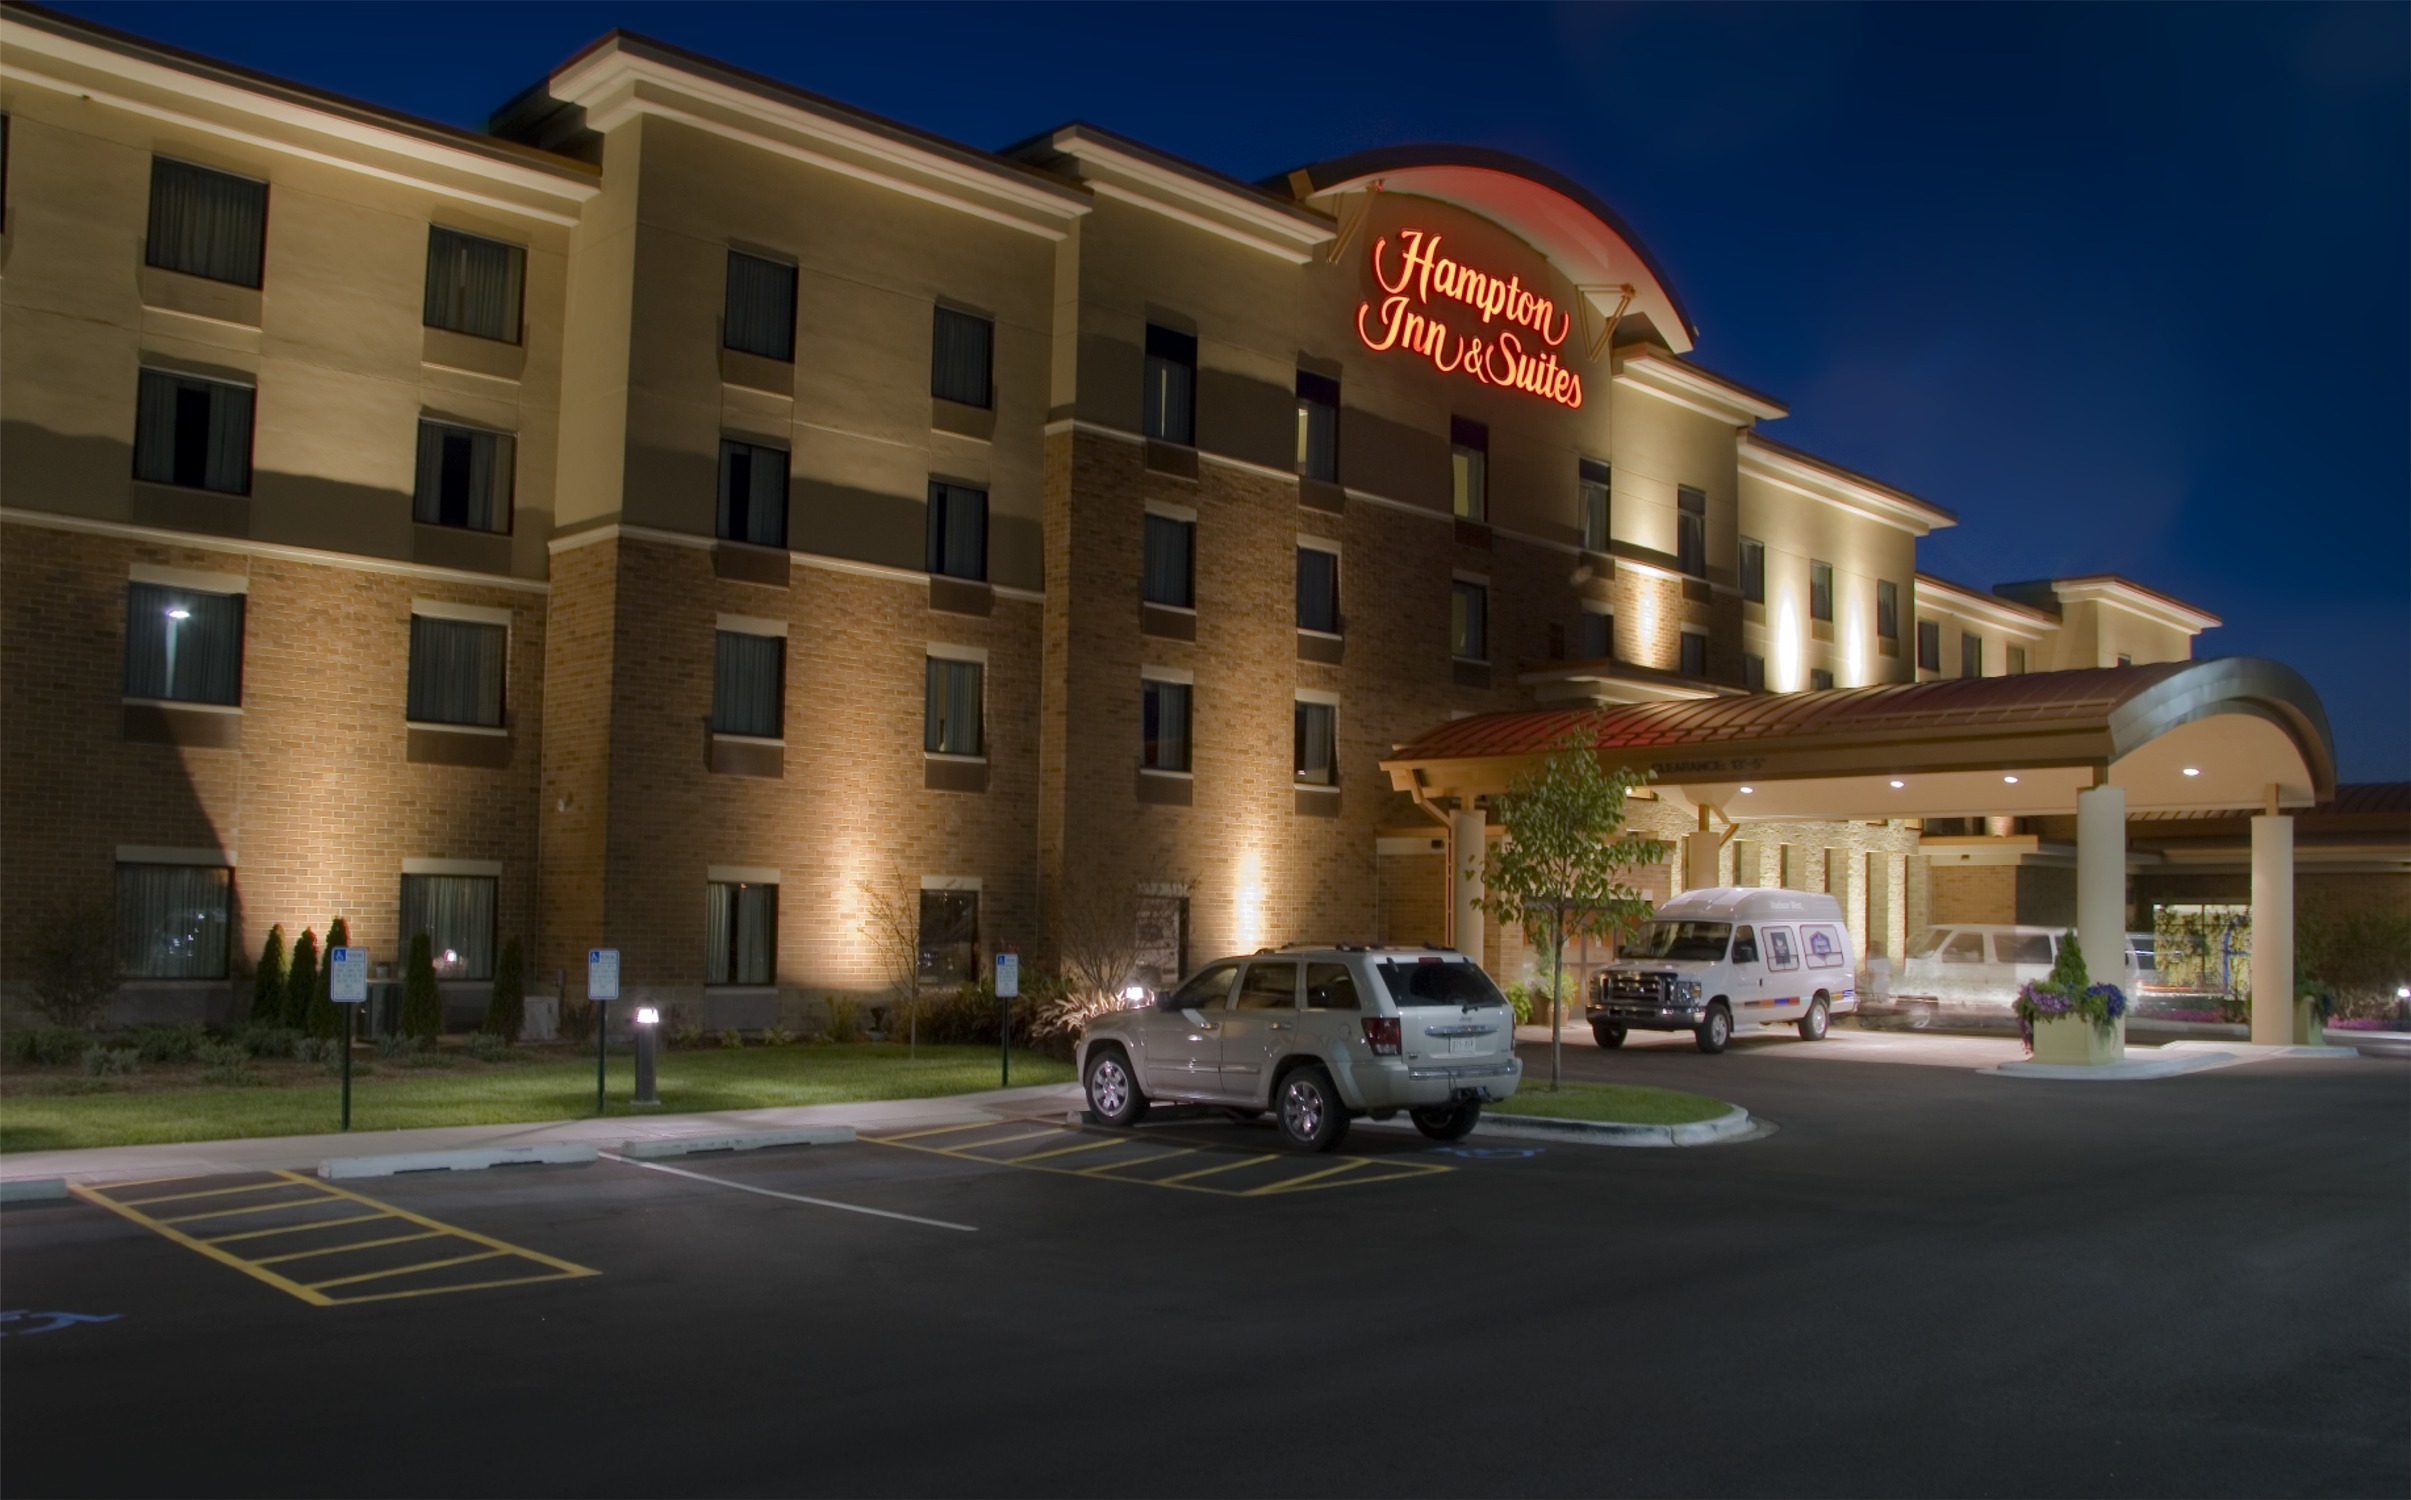 Photo of Hampton Inn & Suites Madison-West, Madison, WI